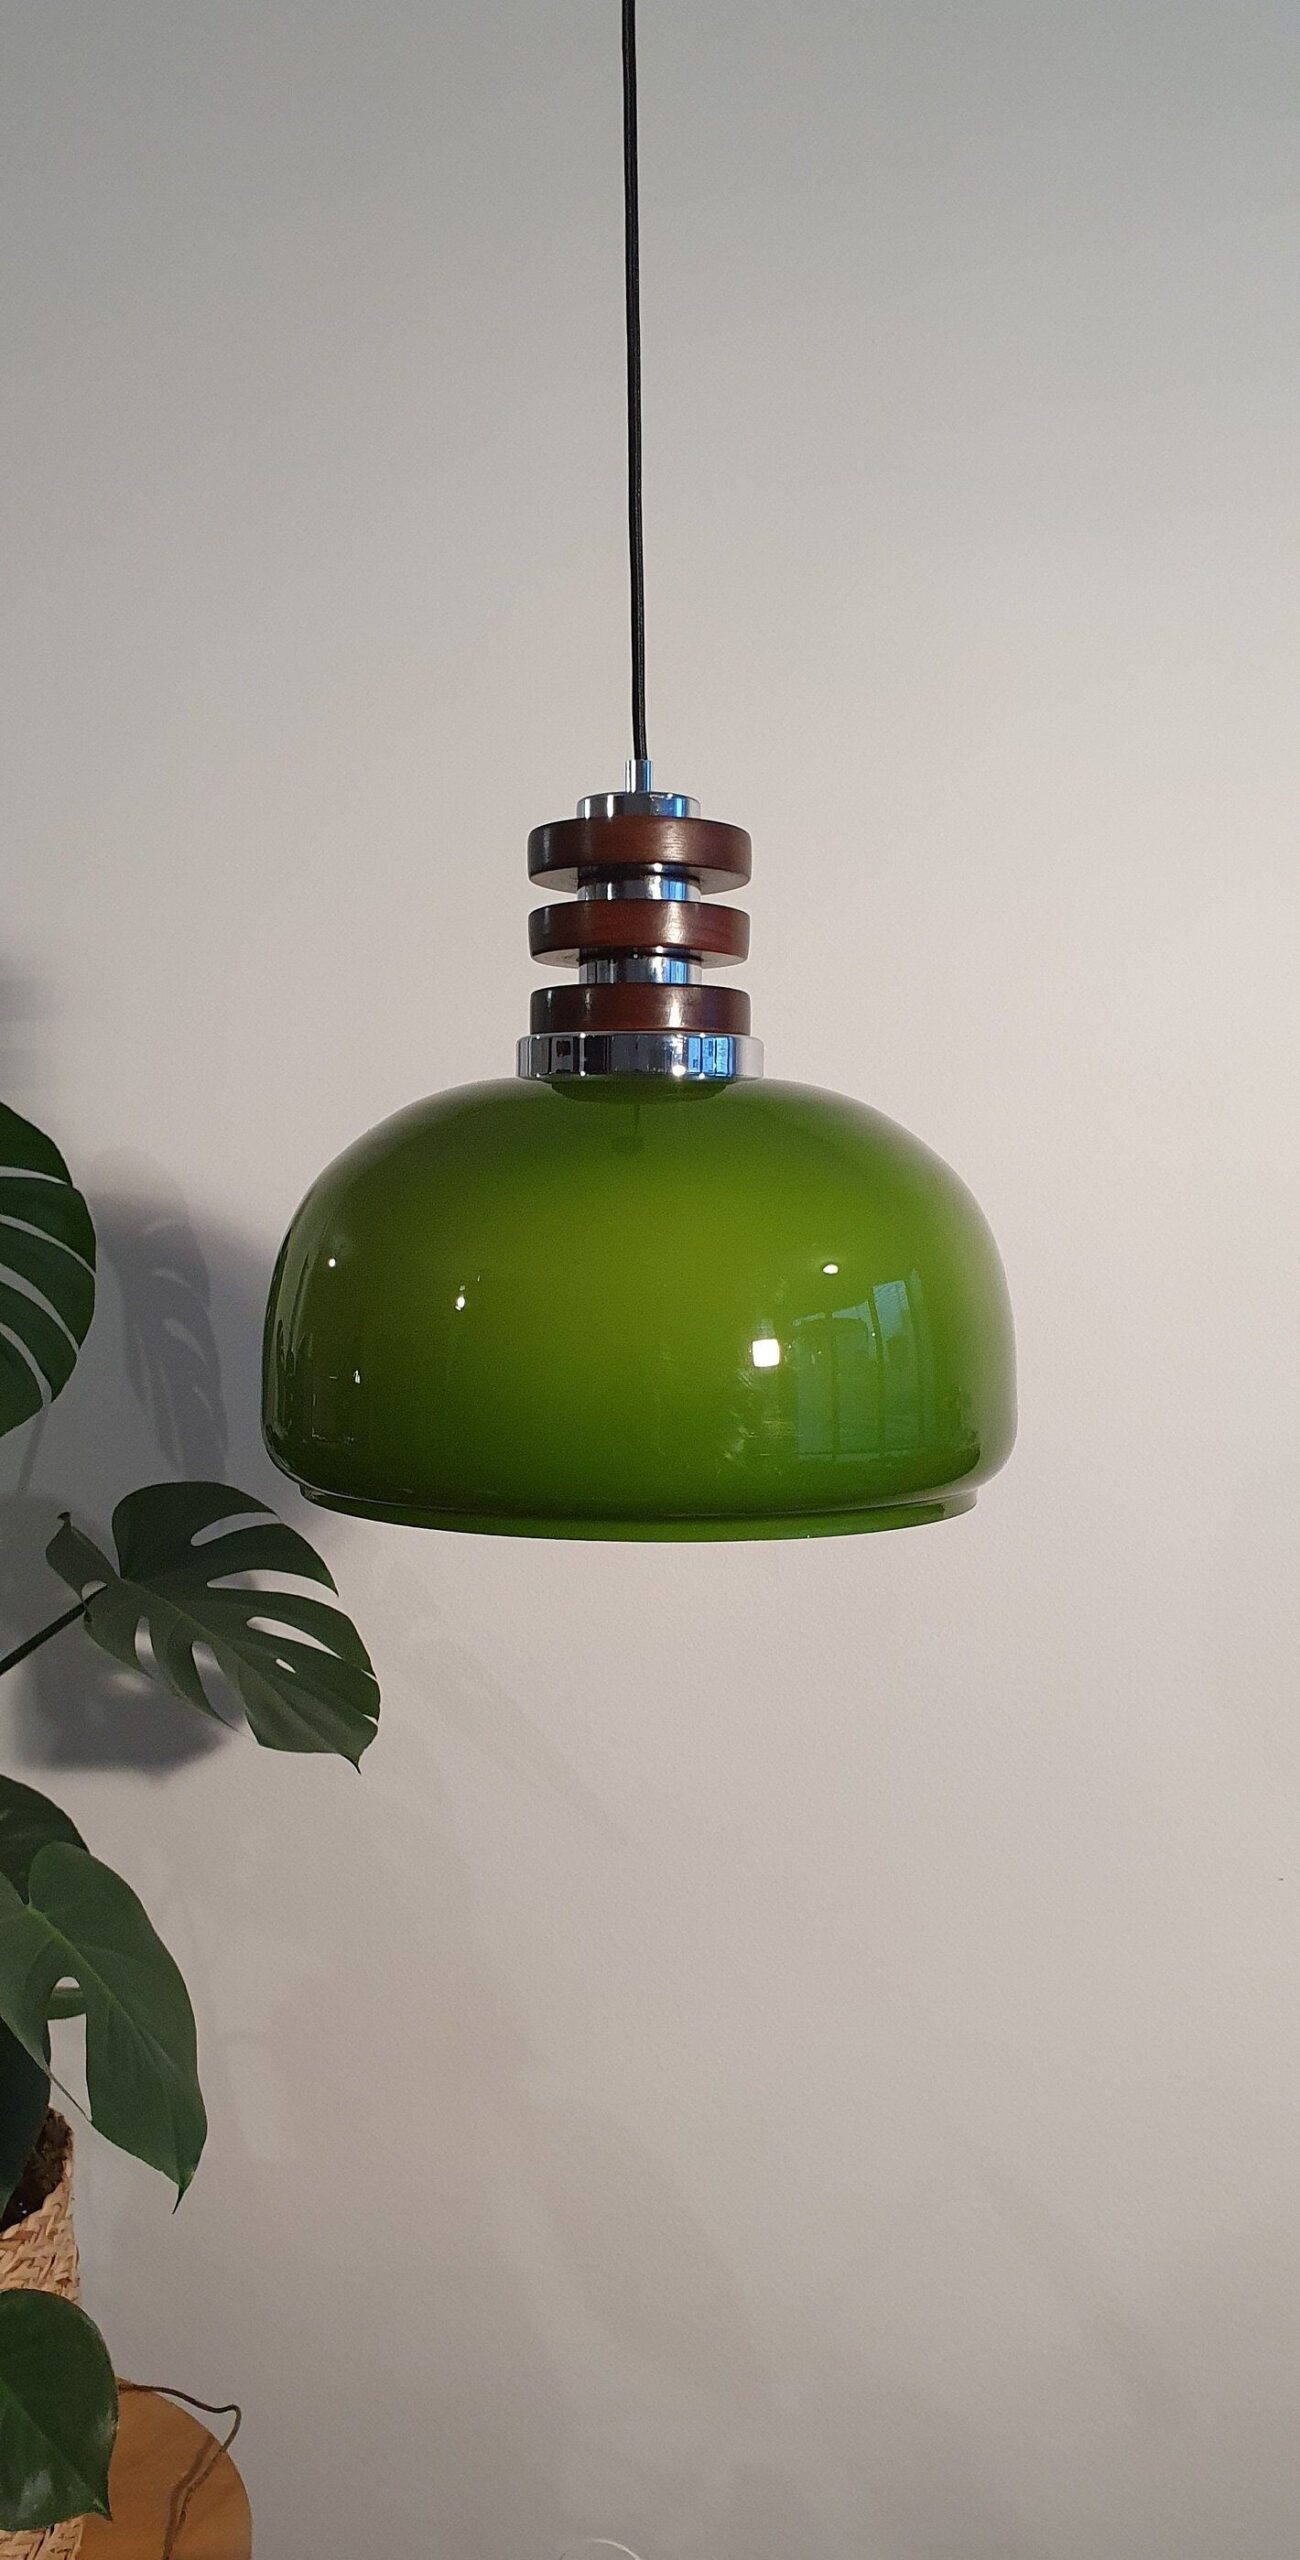 Retro Lamps : Vintage Style Retro Lamps to Brighten Your Home Décor